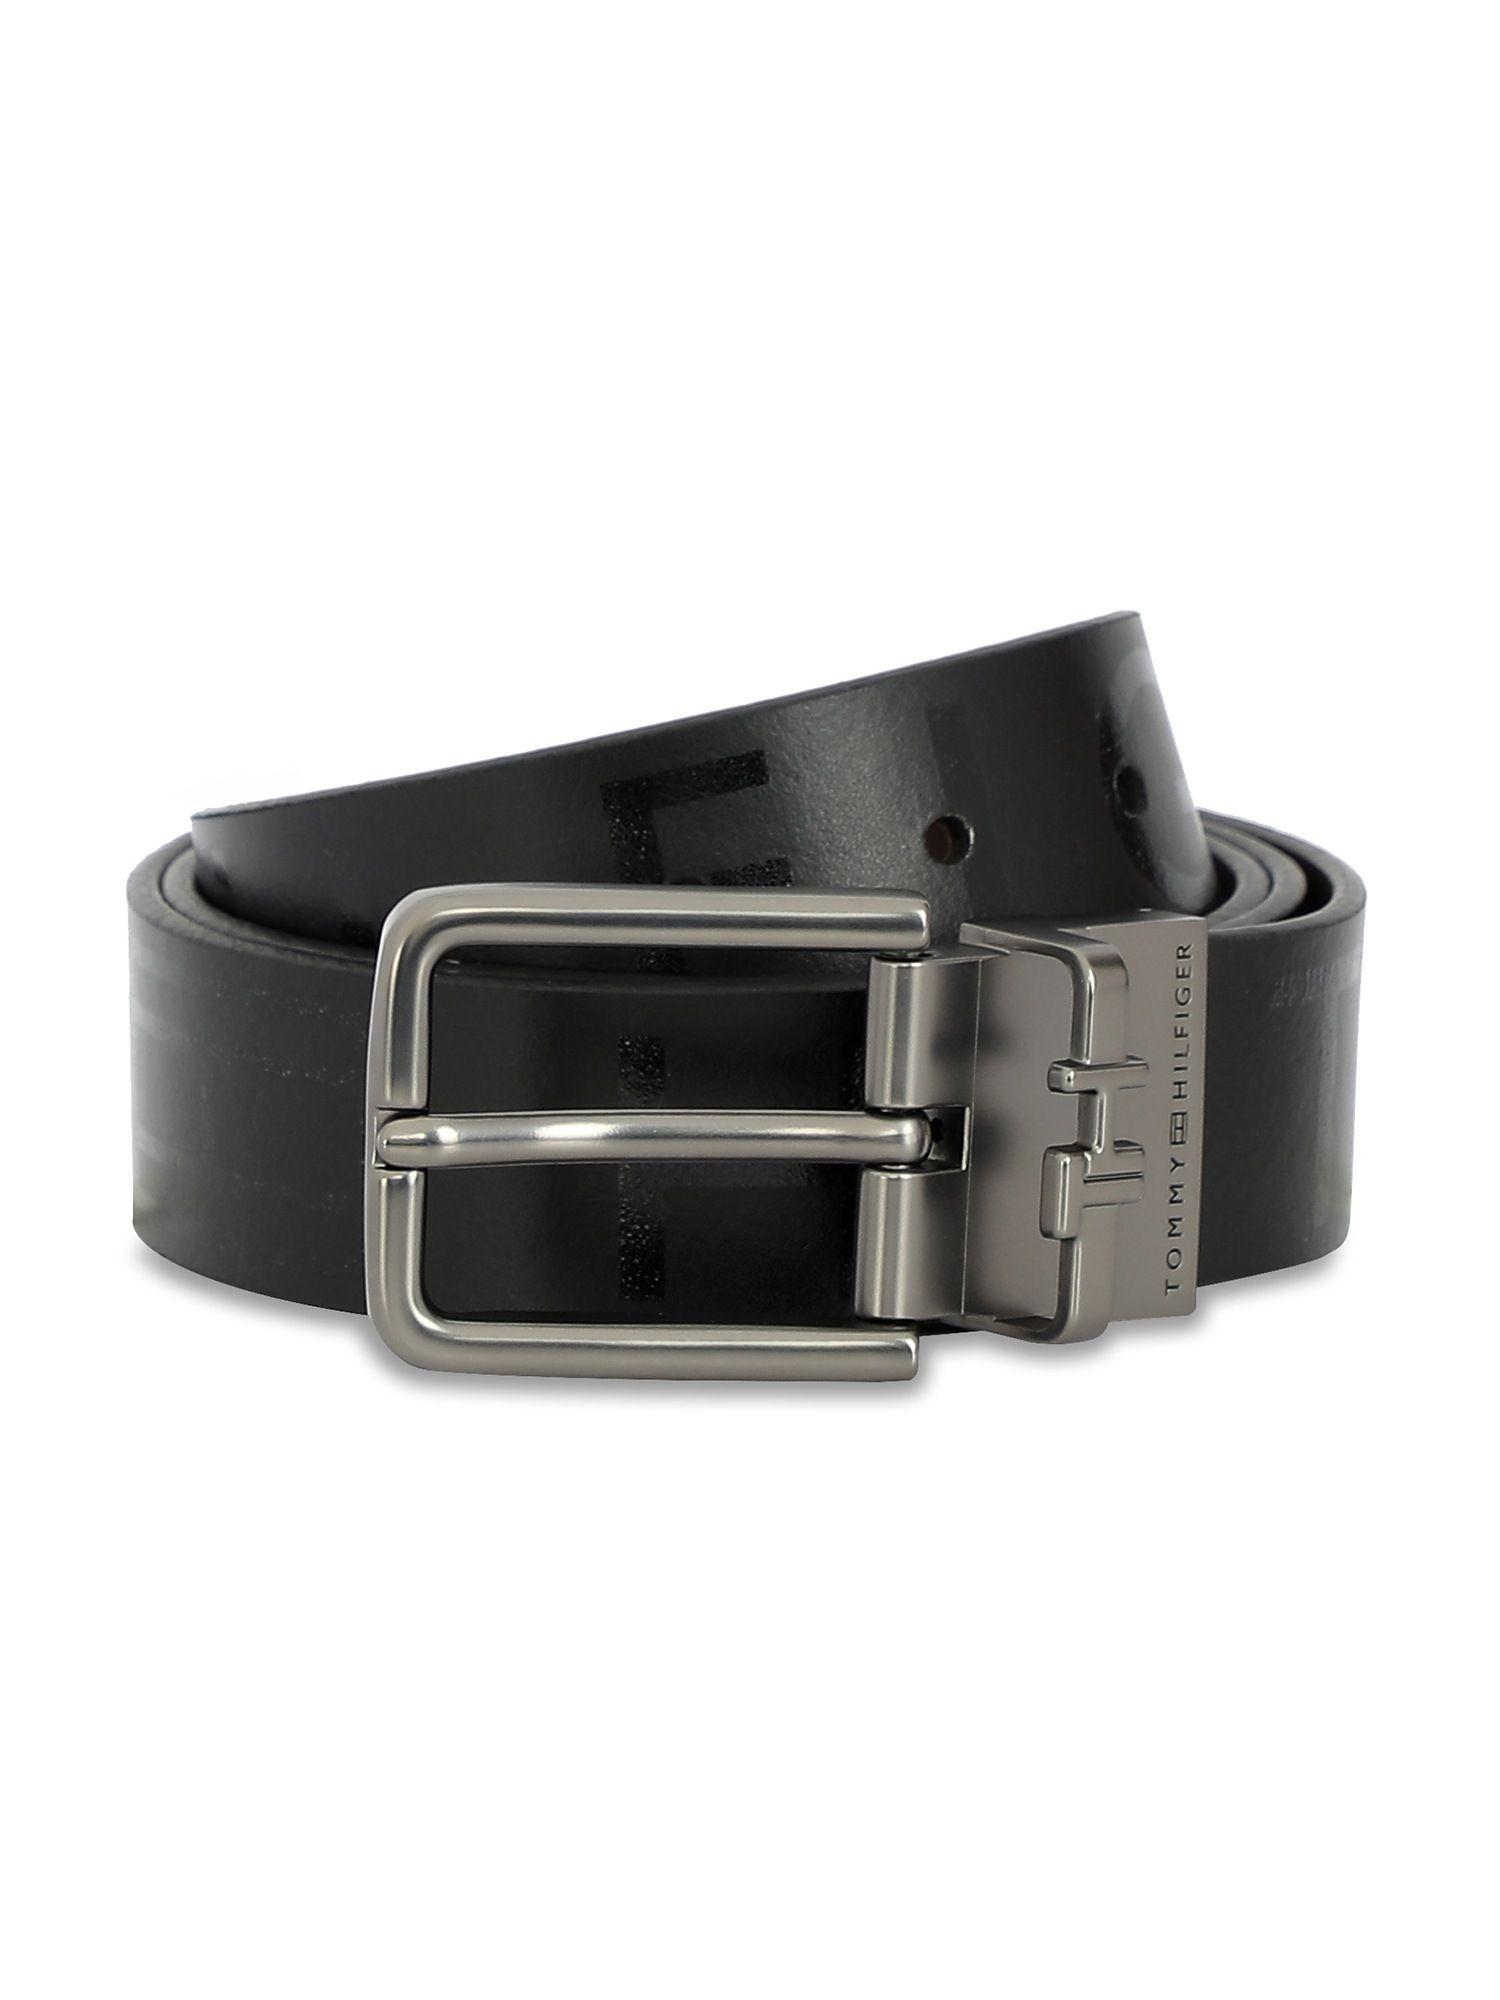 sergio mens leather reversible printed belt-multi-color